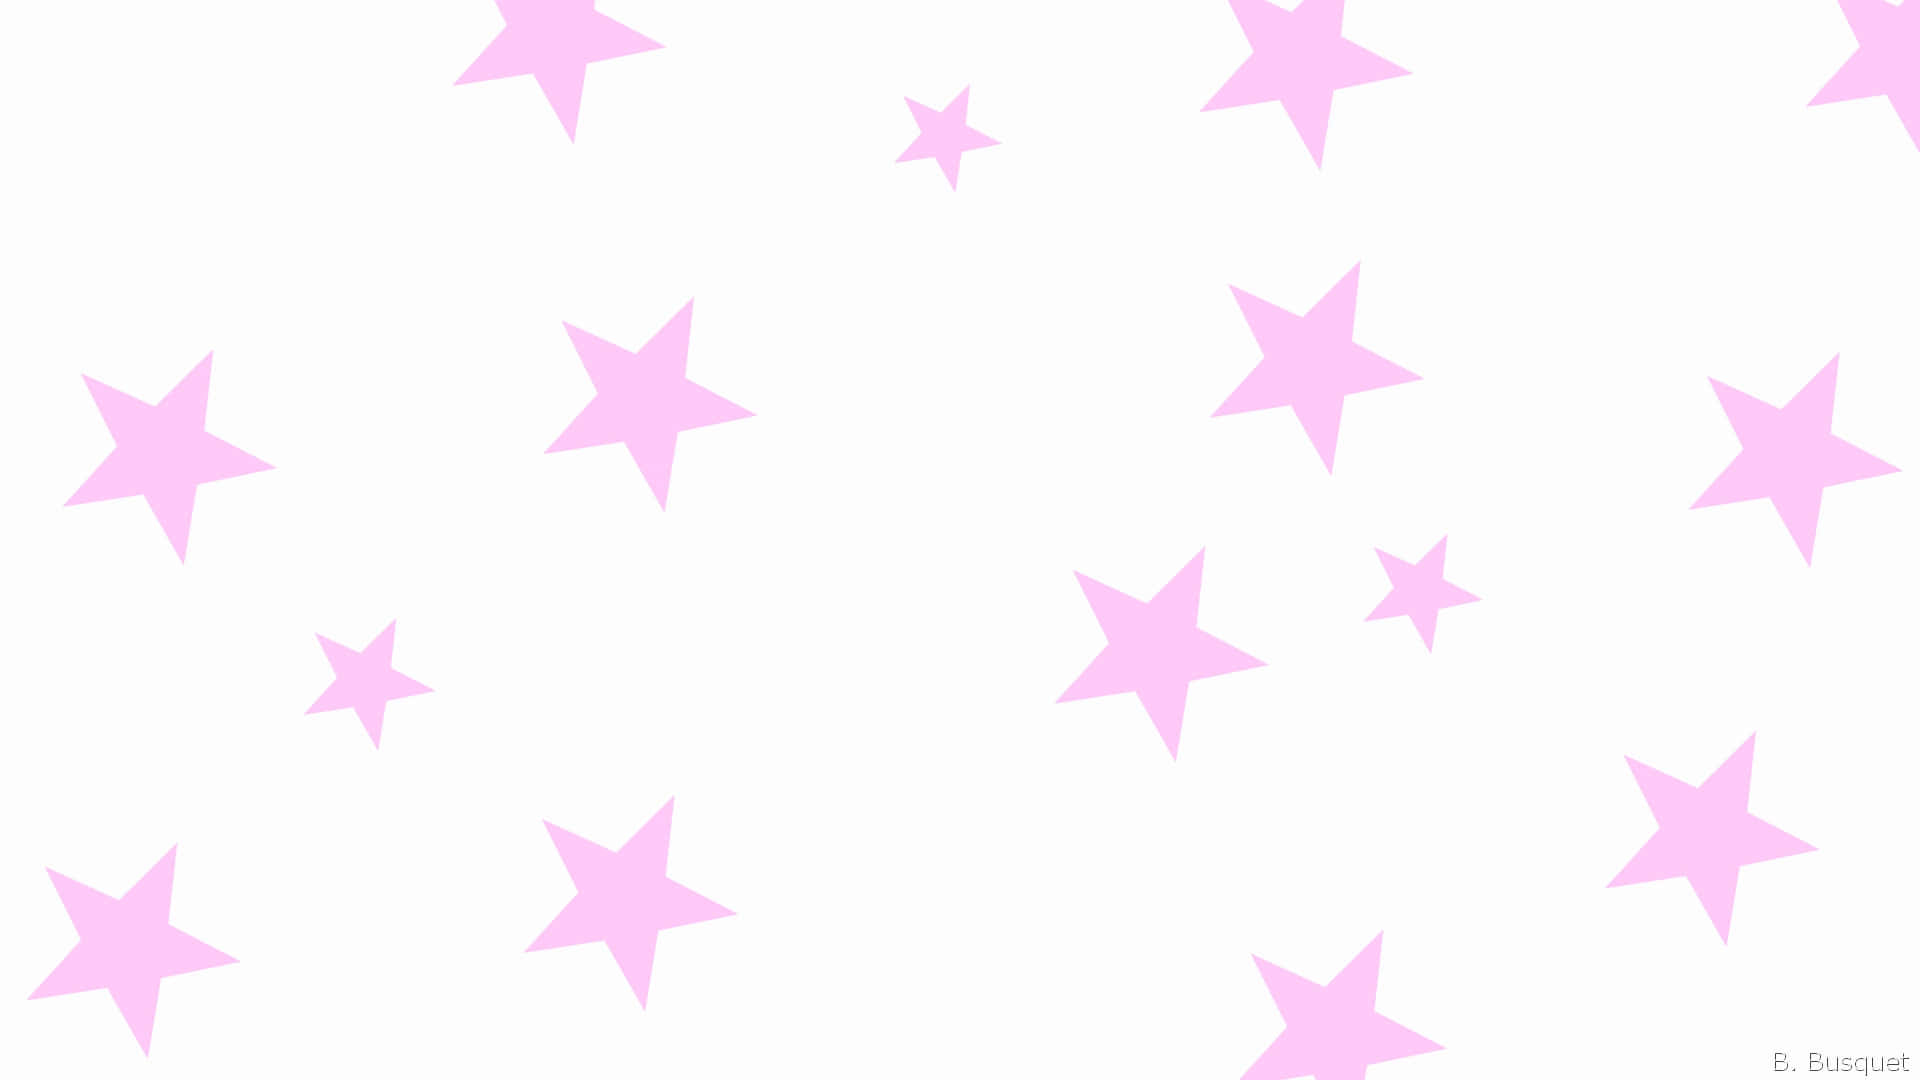 A shining pink star amidst a deep blue sky